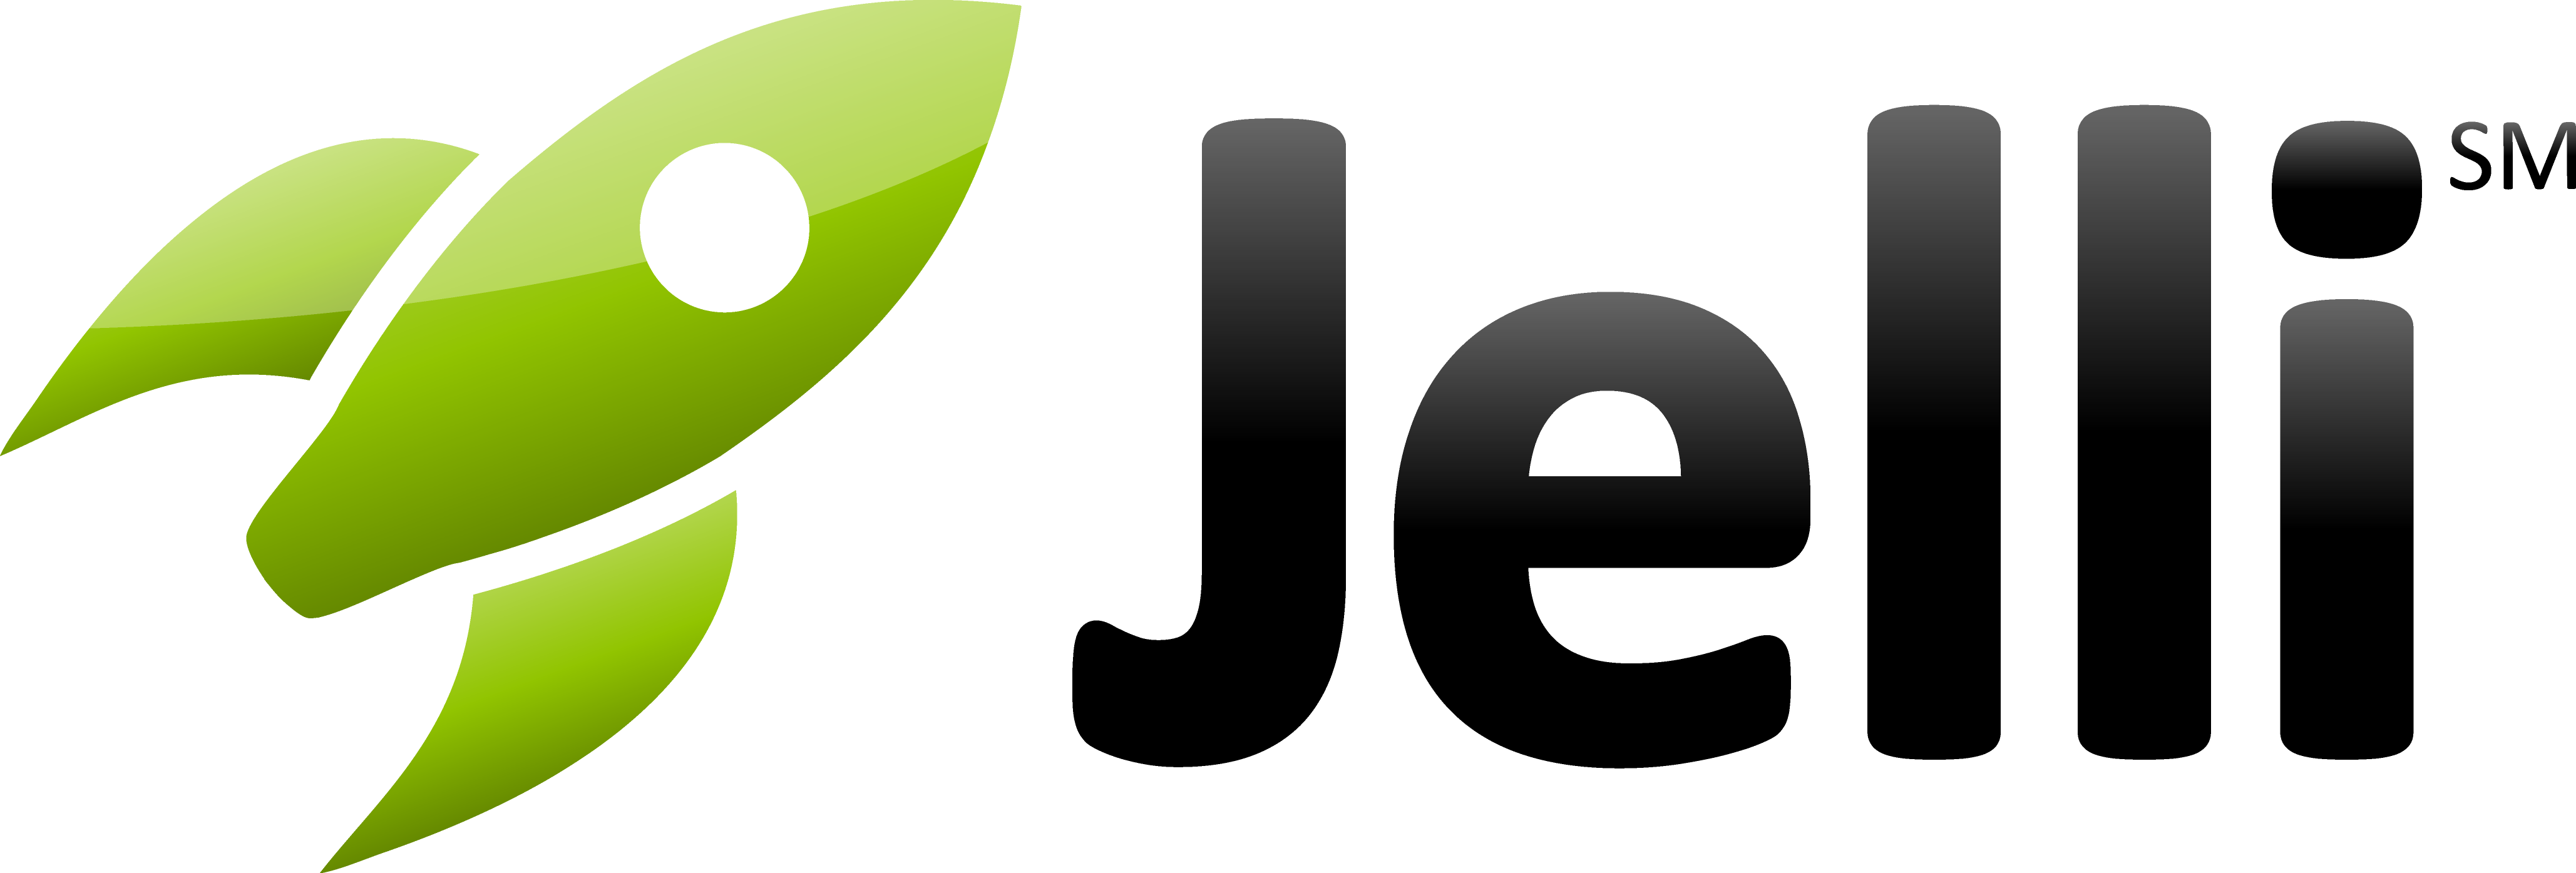 jelli_logo